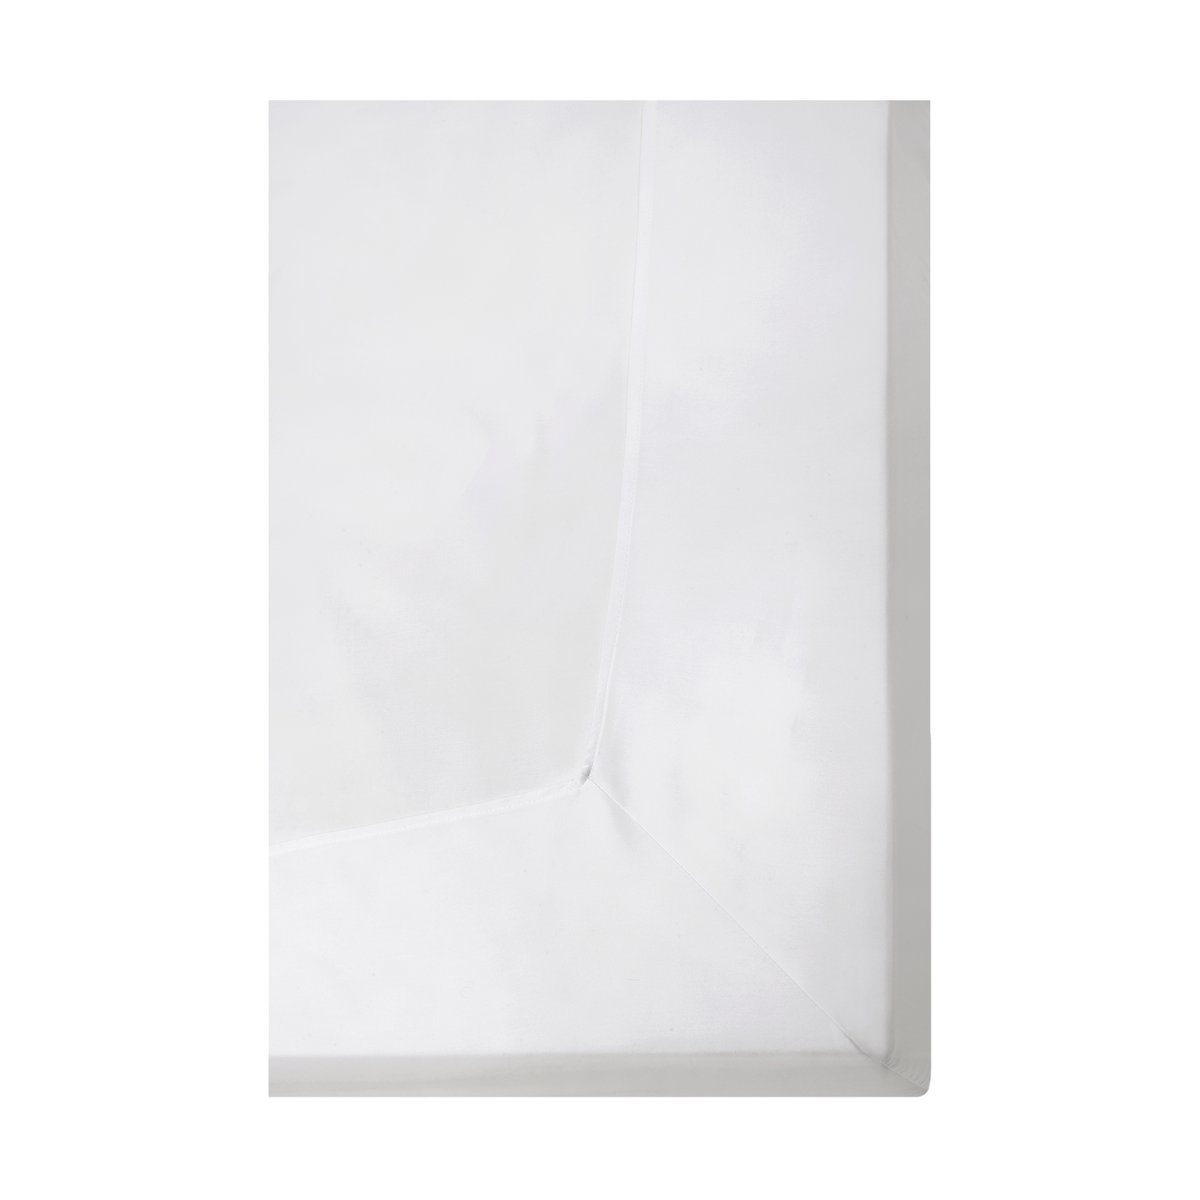 Himla Soul omslag genaaid hoeslaken 120x200 cm White